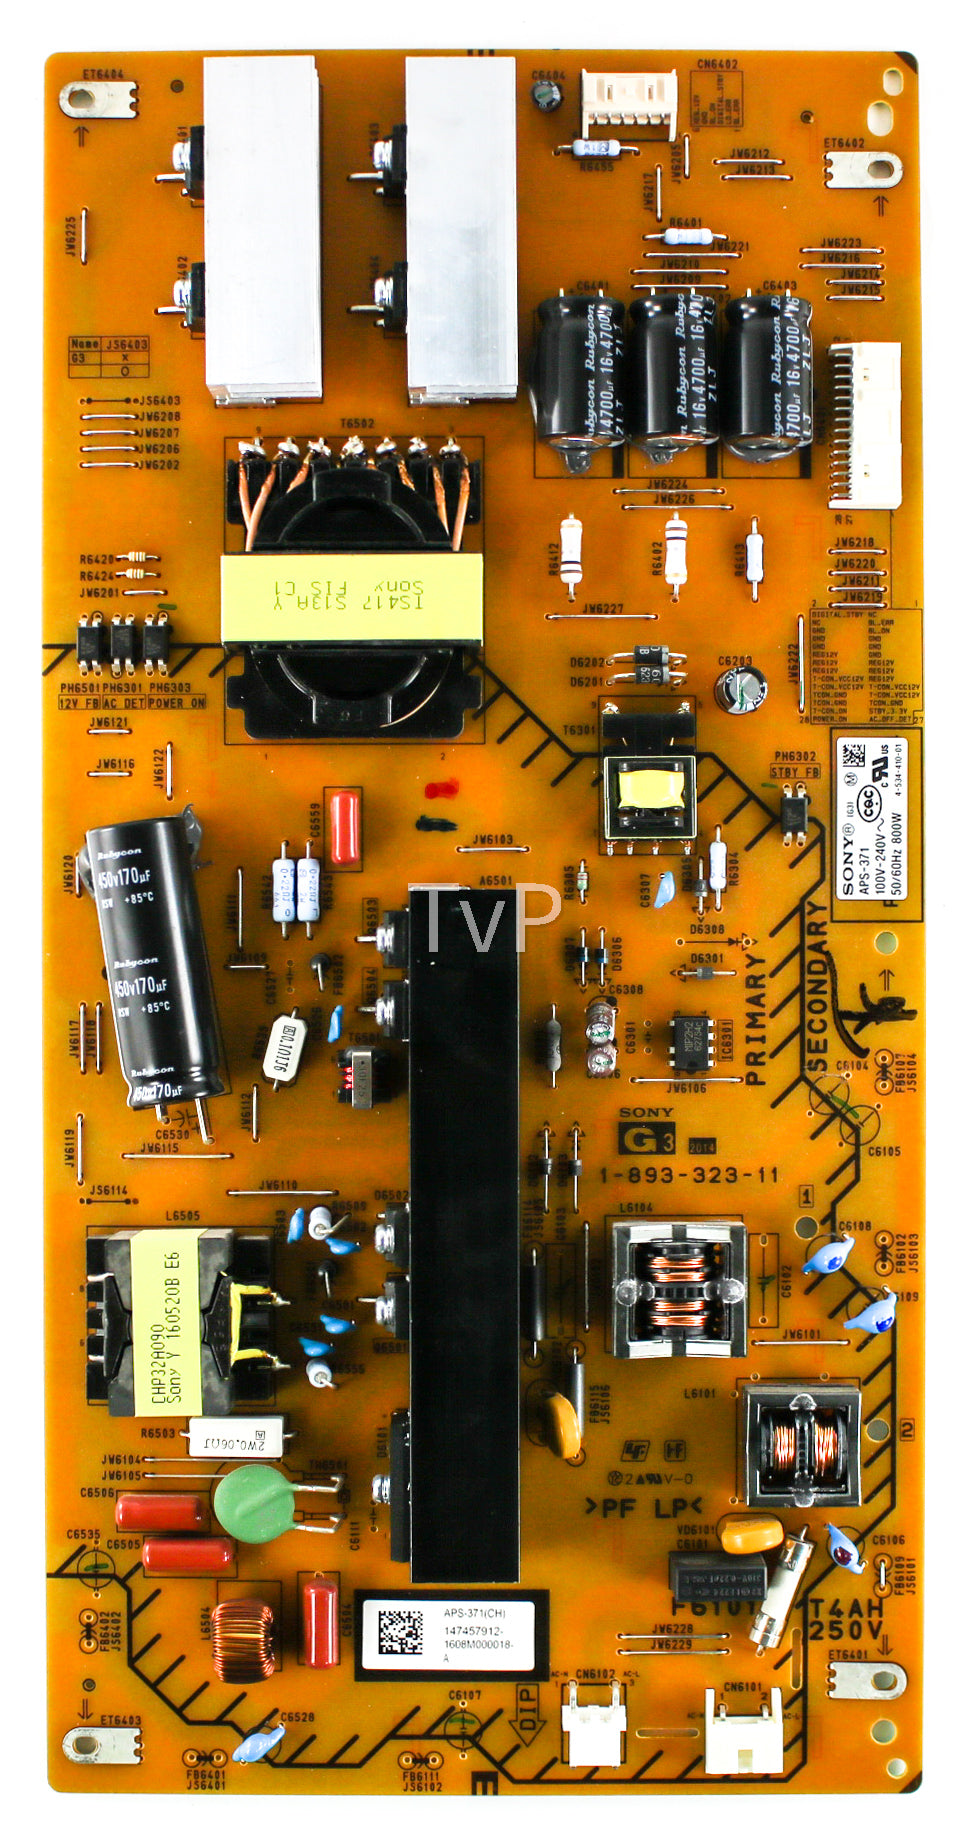 SONY 1-474-579-12 G3 Power Supply Board